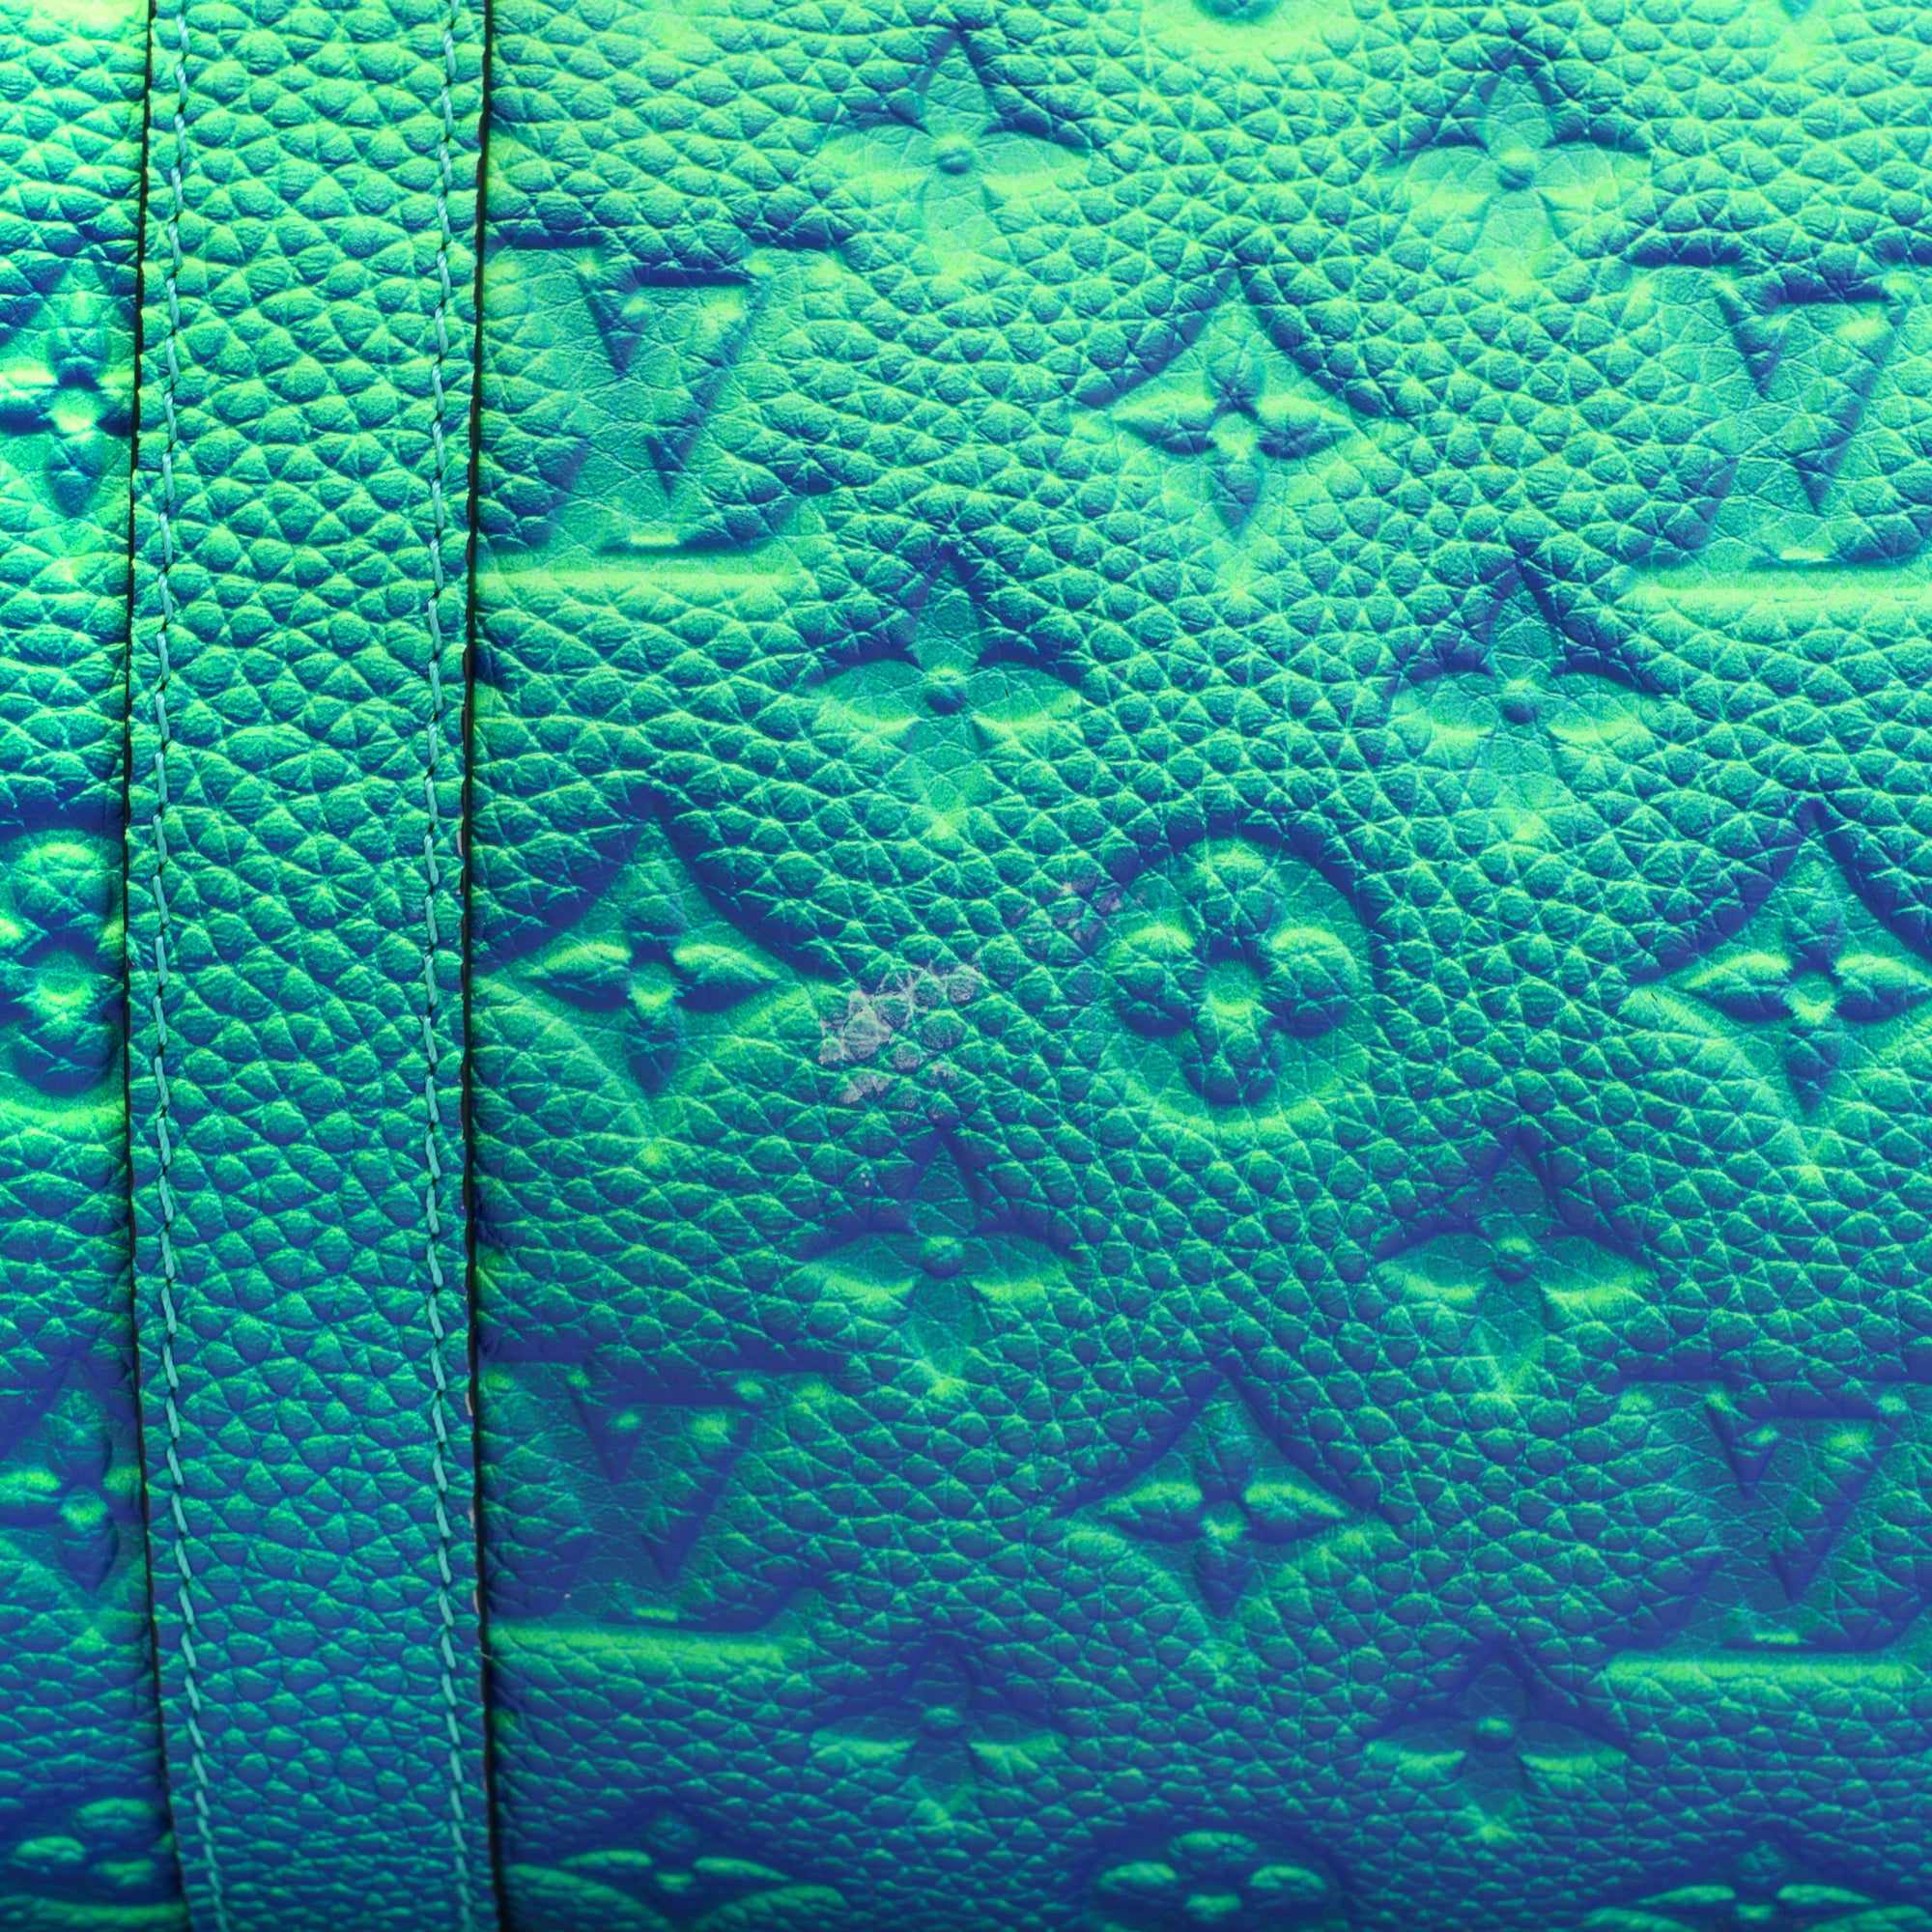 Sold at Auction: Louis Vuitton, LOUIS VUITTON, Virgil ABLOH Sac Keepall 50  cm Taurillon Illusion Blue/Green